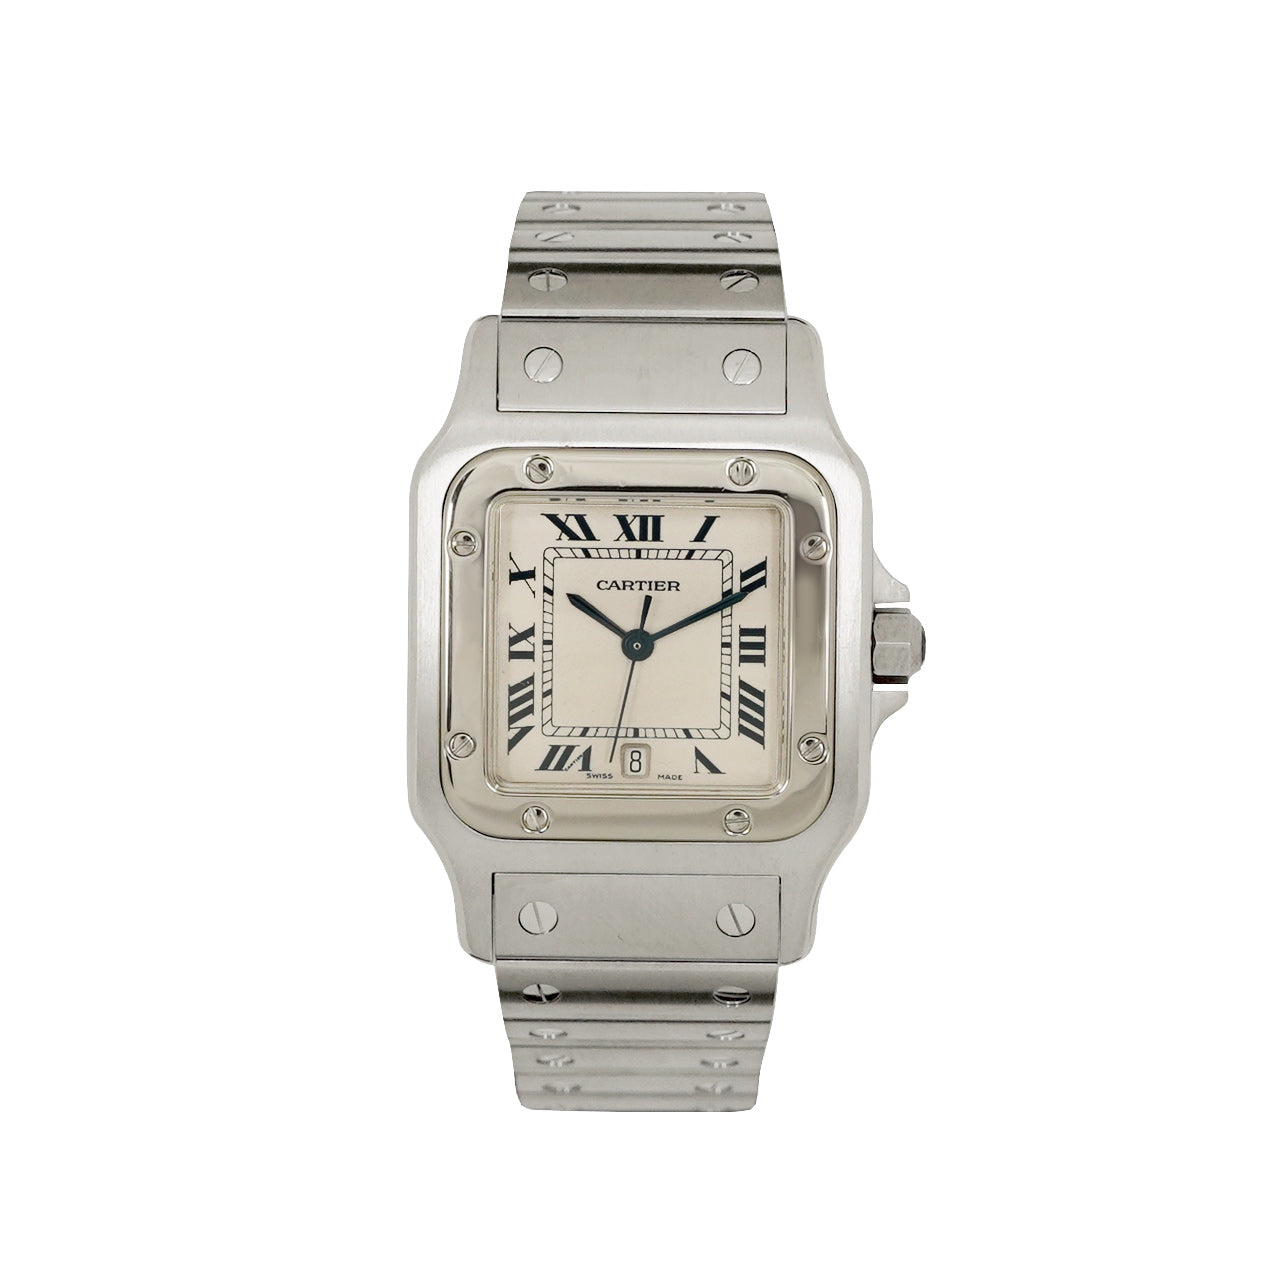 Cartier カルティエ サントスガルベ SANTOS GALBEE LM/NEW BELT 1990年代製 アンティーク腕時計  5500 【送料無料】